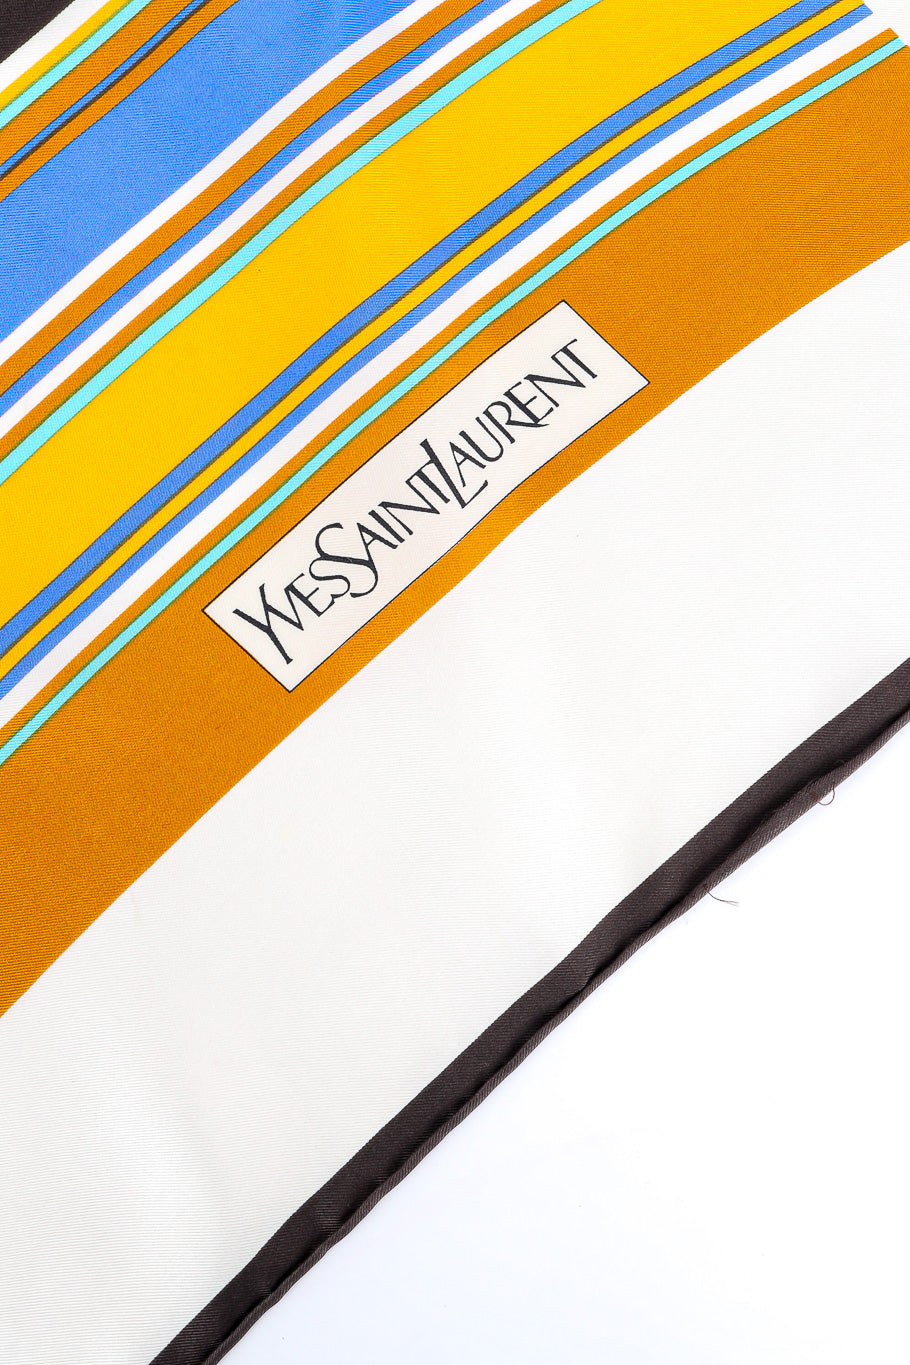 Striped Silk Scarf by Yves Saint Laurent Photo of Designer Logo @recessla